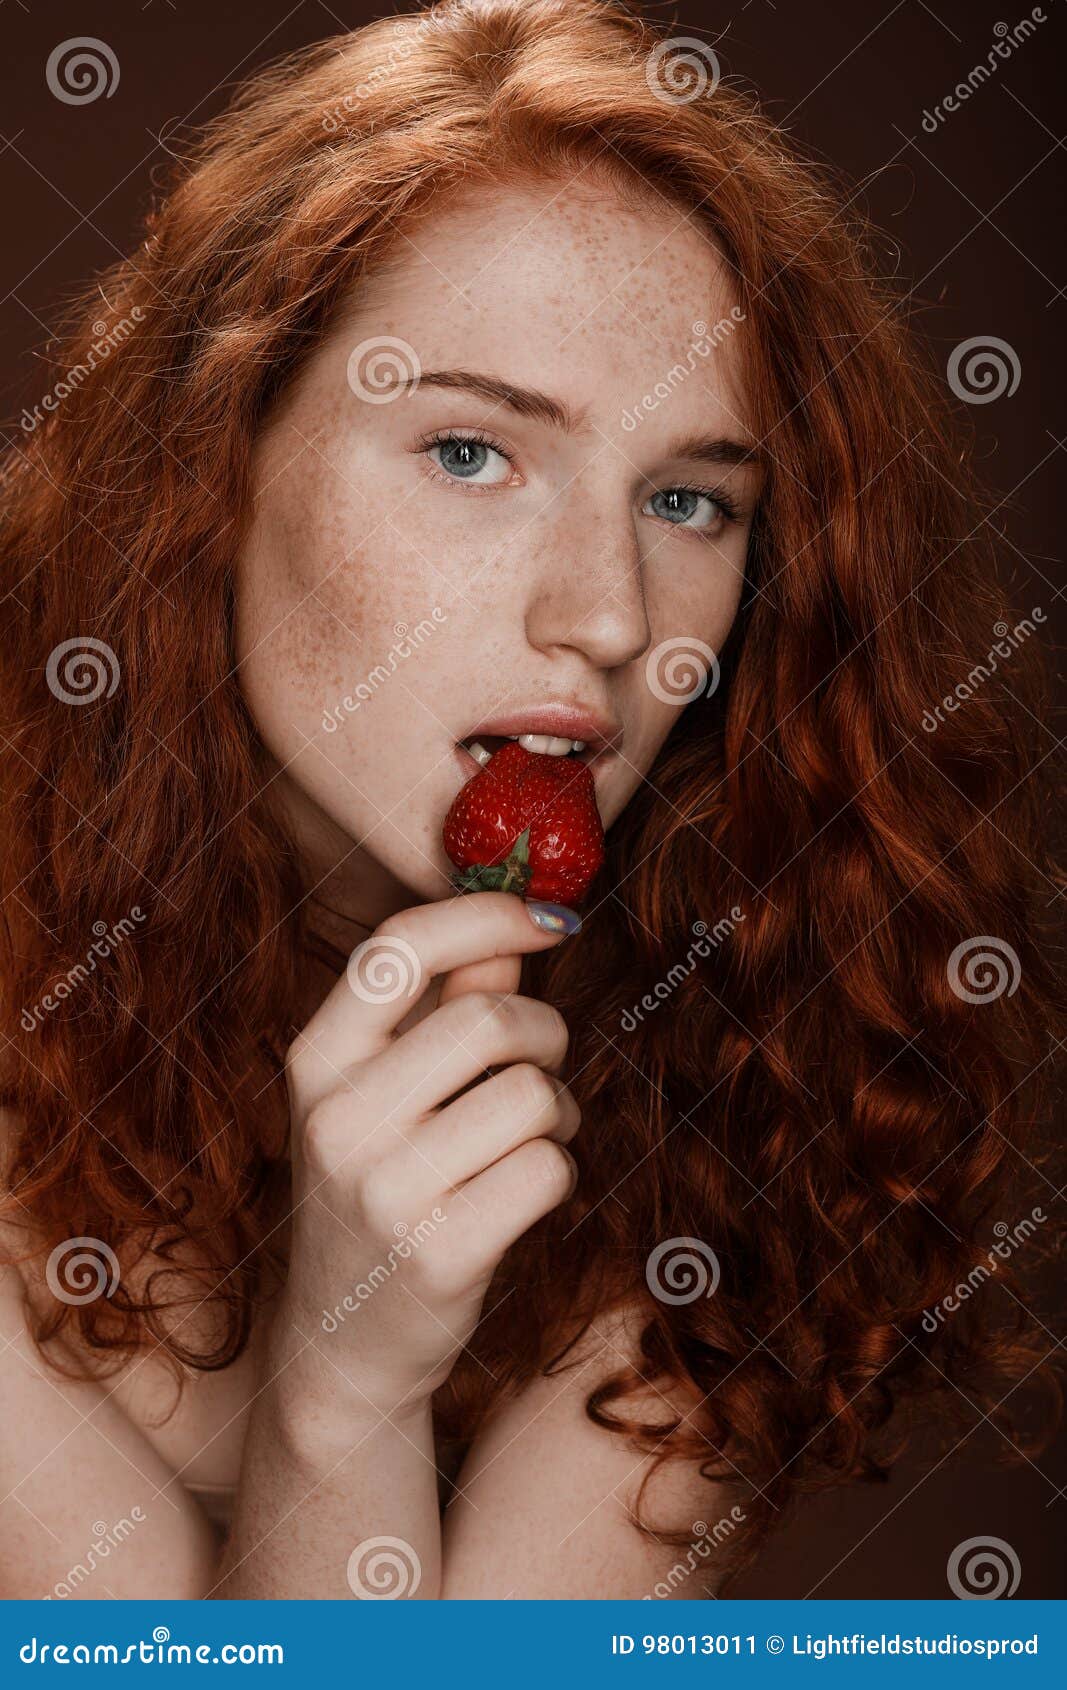 127 Redhead Eating Strawberry Stock Photos - Free & Royalty-Free